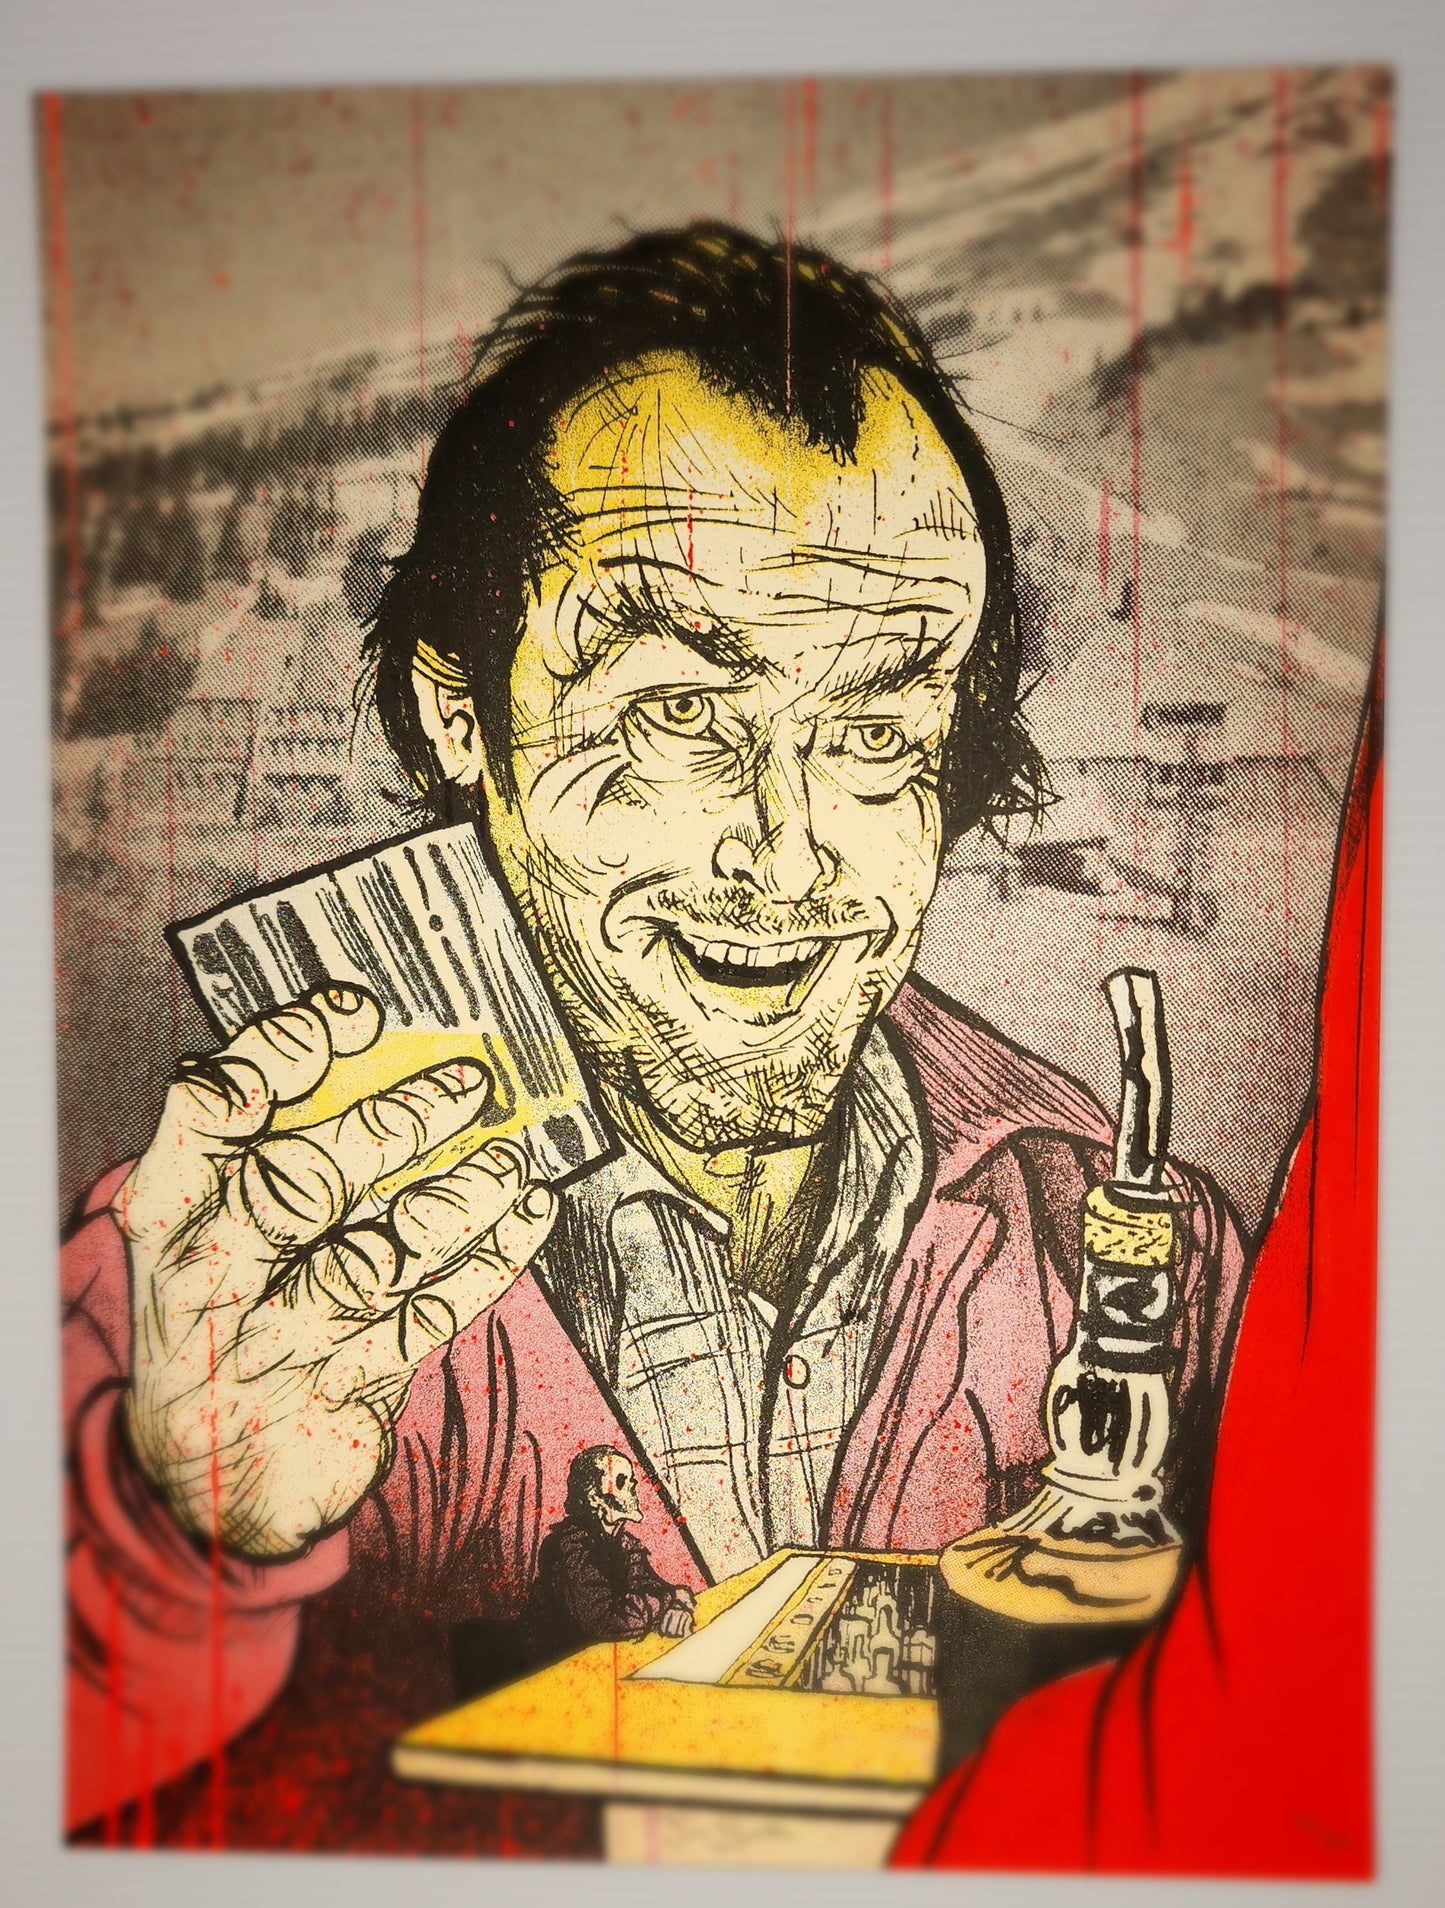 Drinking Buddies (Metallic Variant): Charles Bukowski, Tom Waits, Jeff Bridges, Jack Nicholson